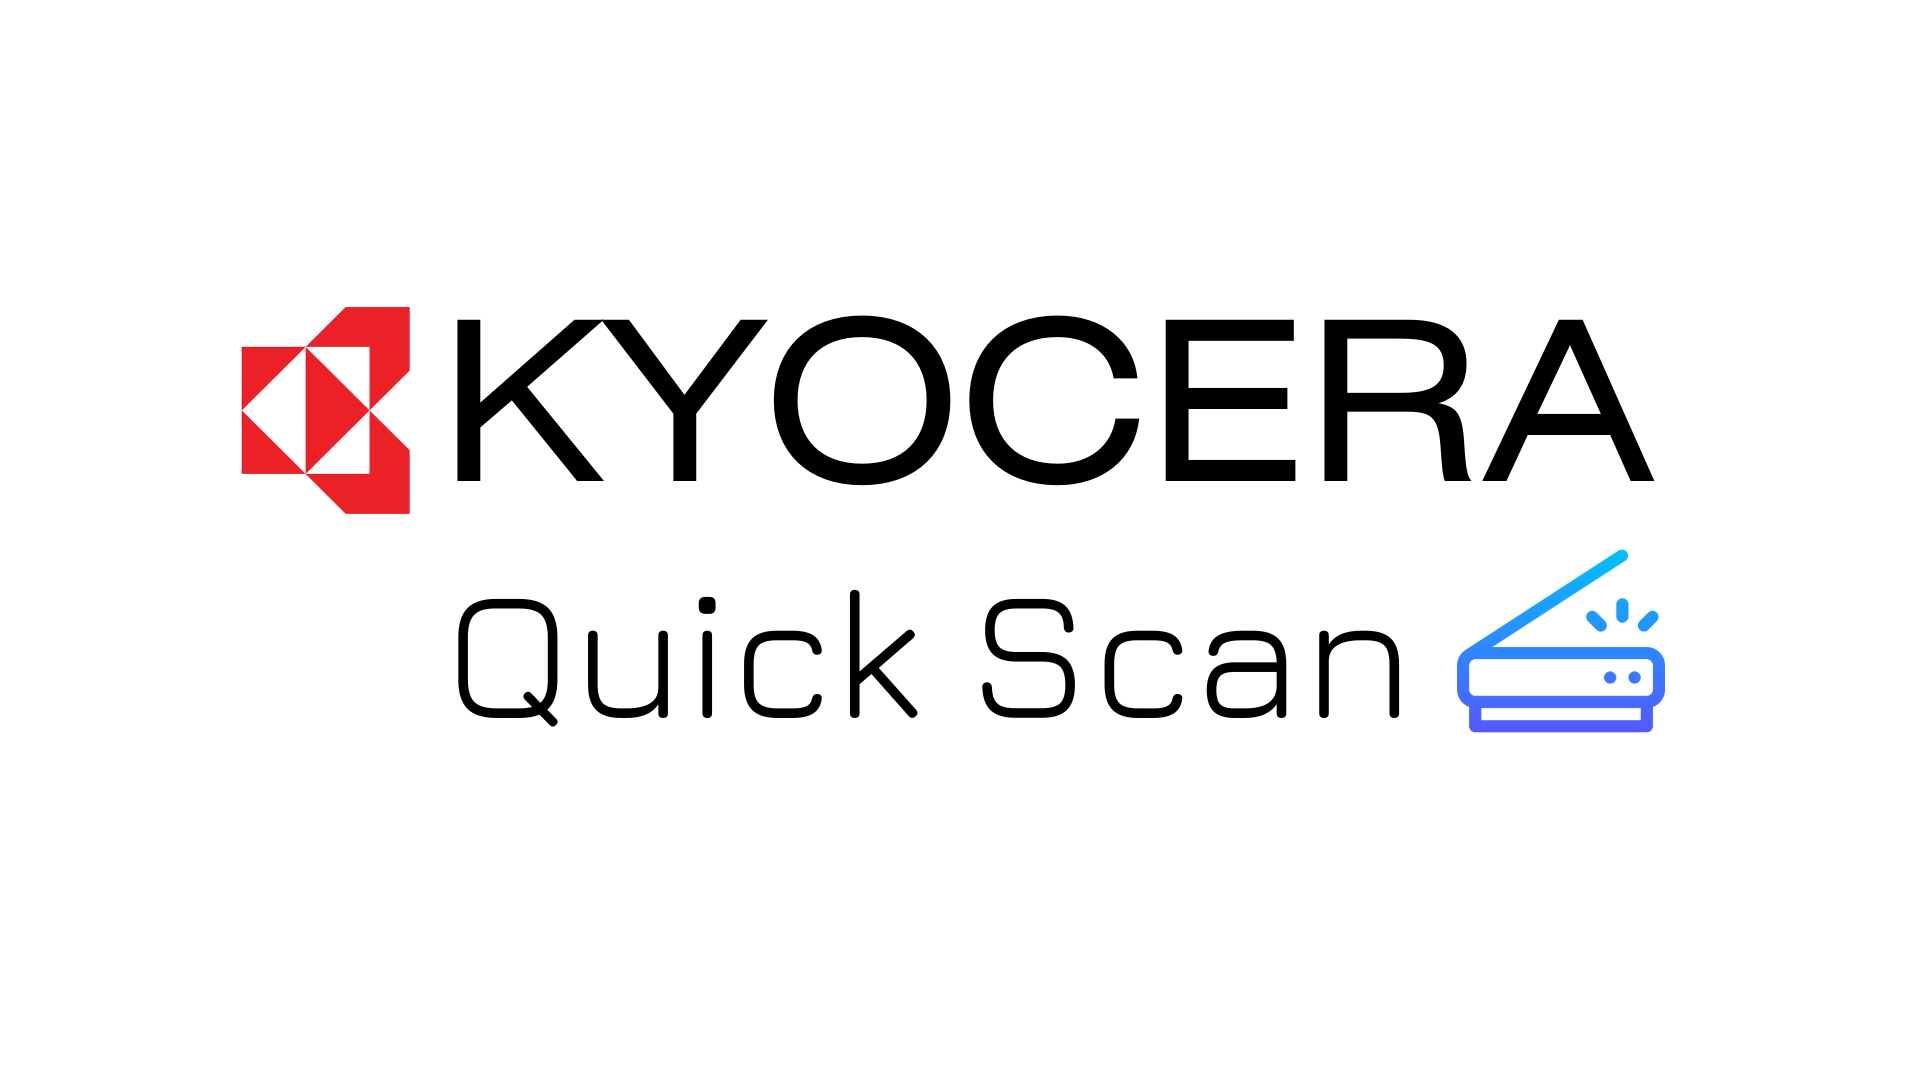 Kyocera Quick Scan